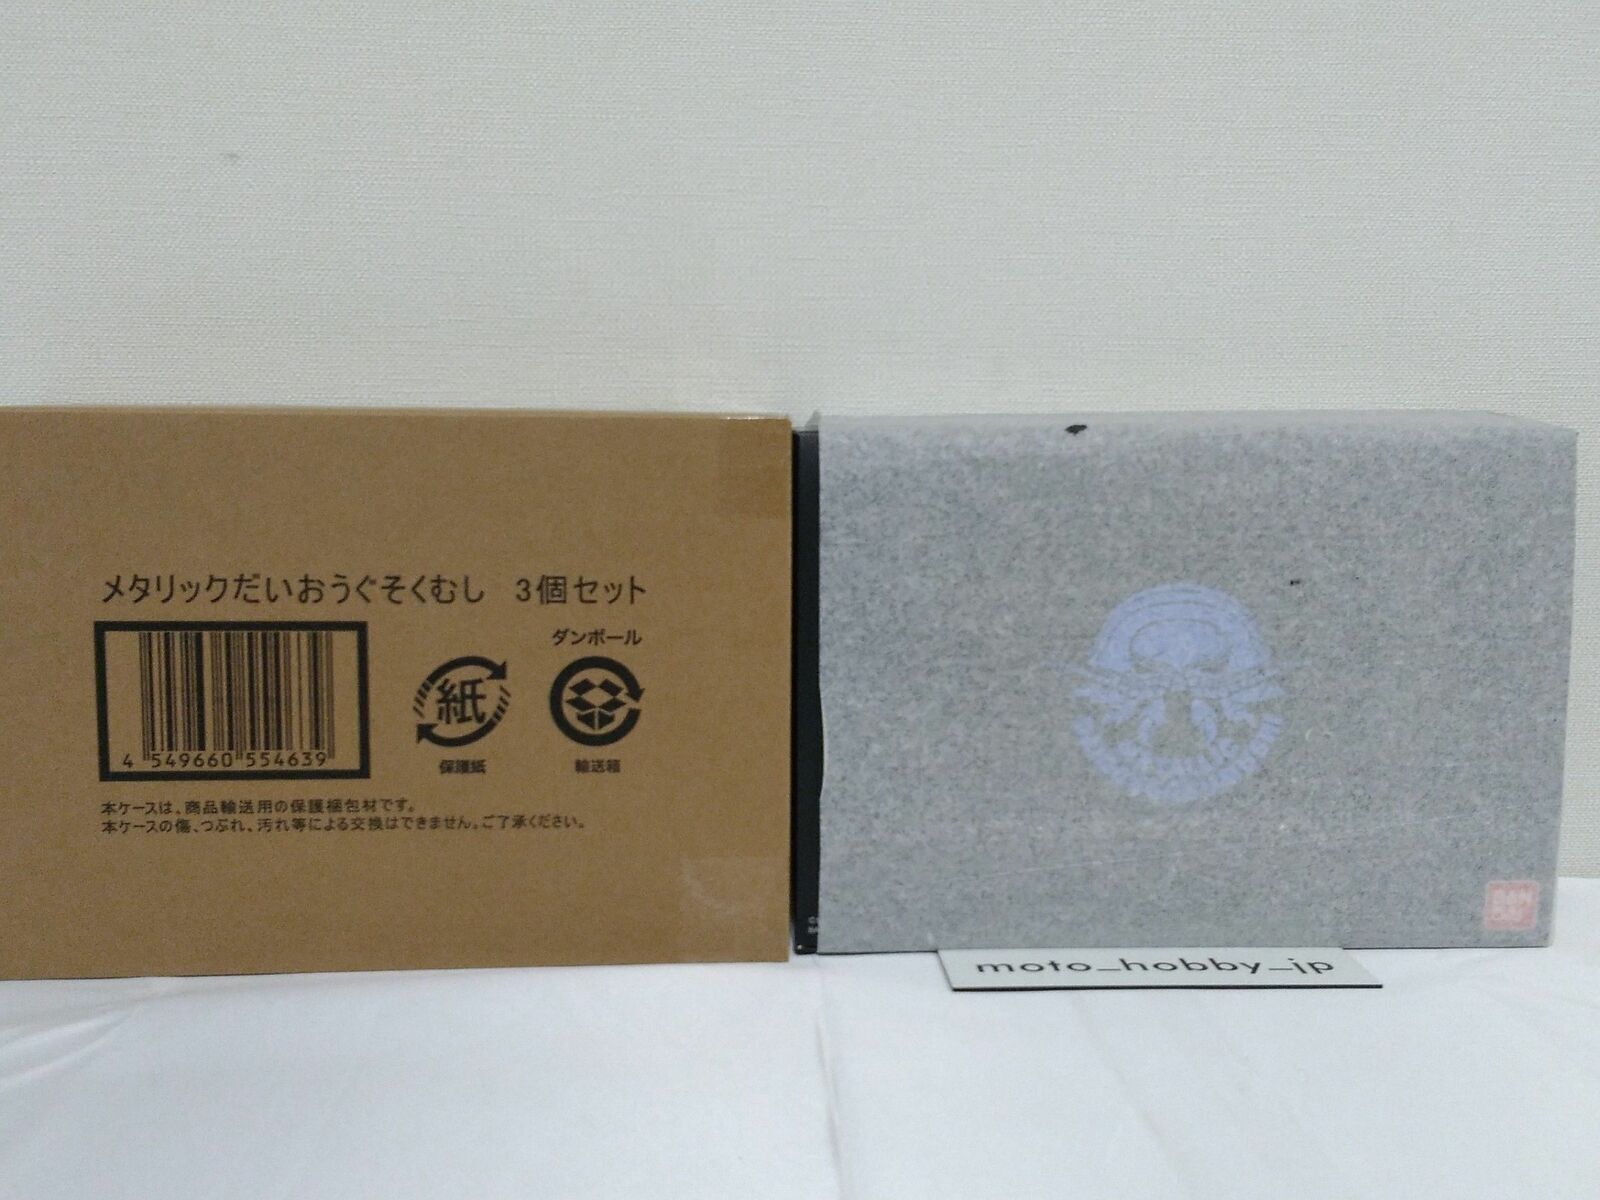 Premium Bandai Metallic Bathynomus giganteus Daiogusokumushi 3 pcs Set 150mm